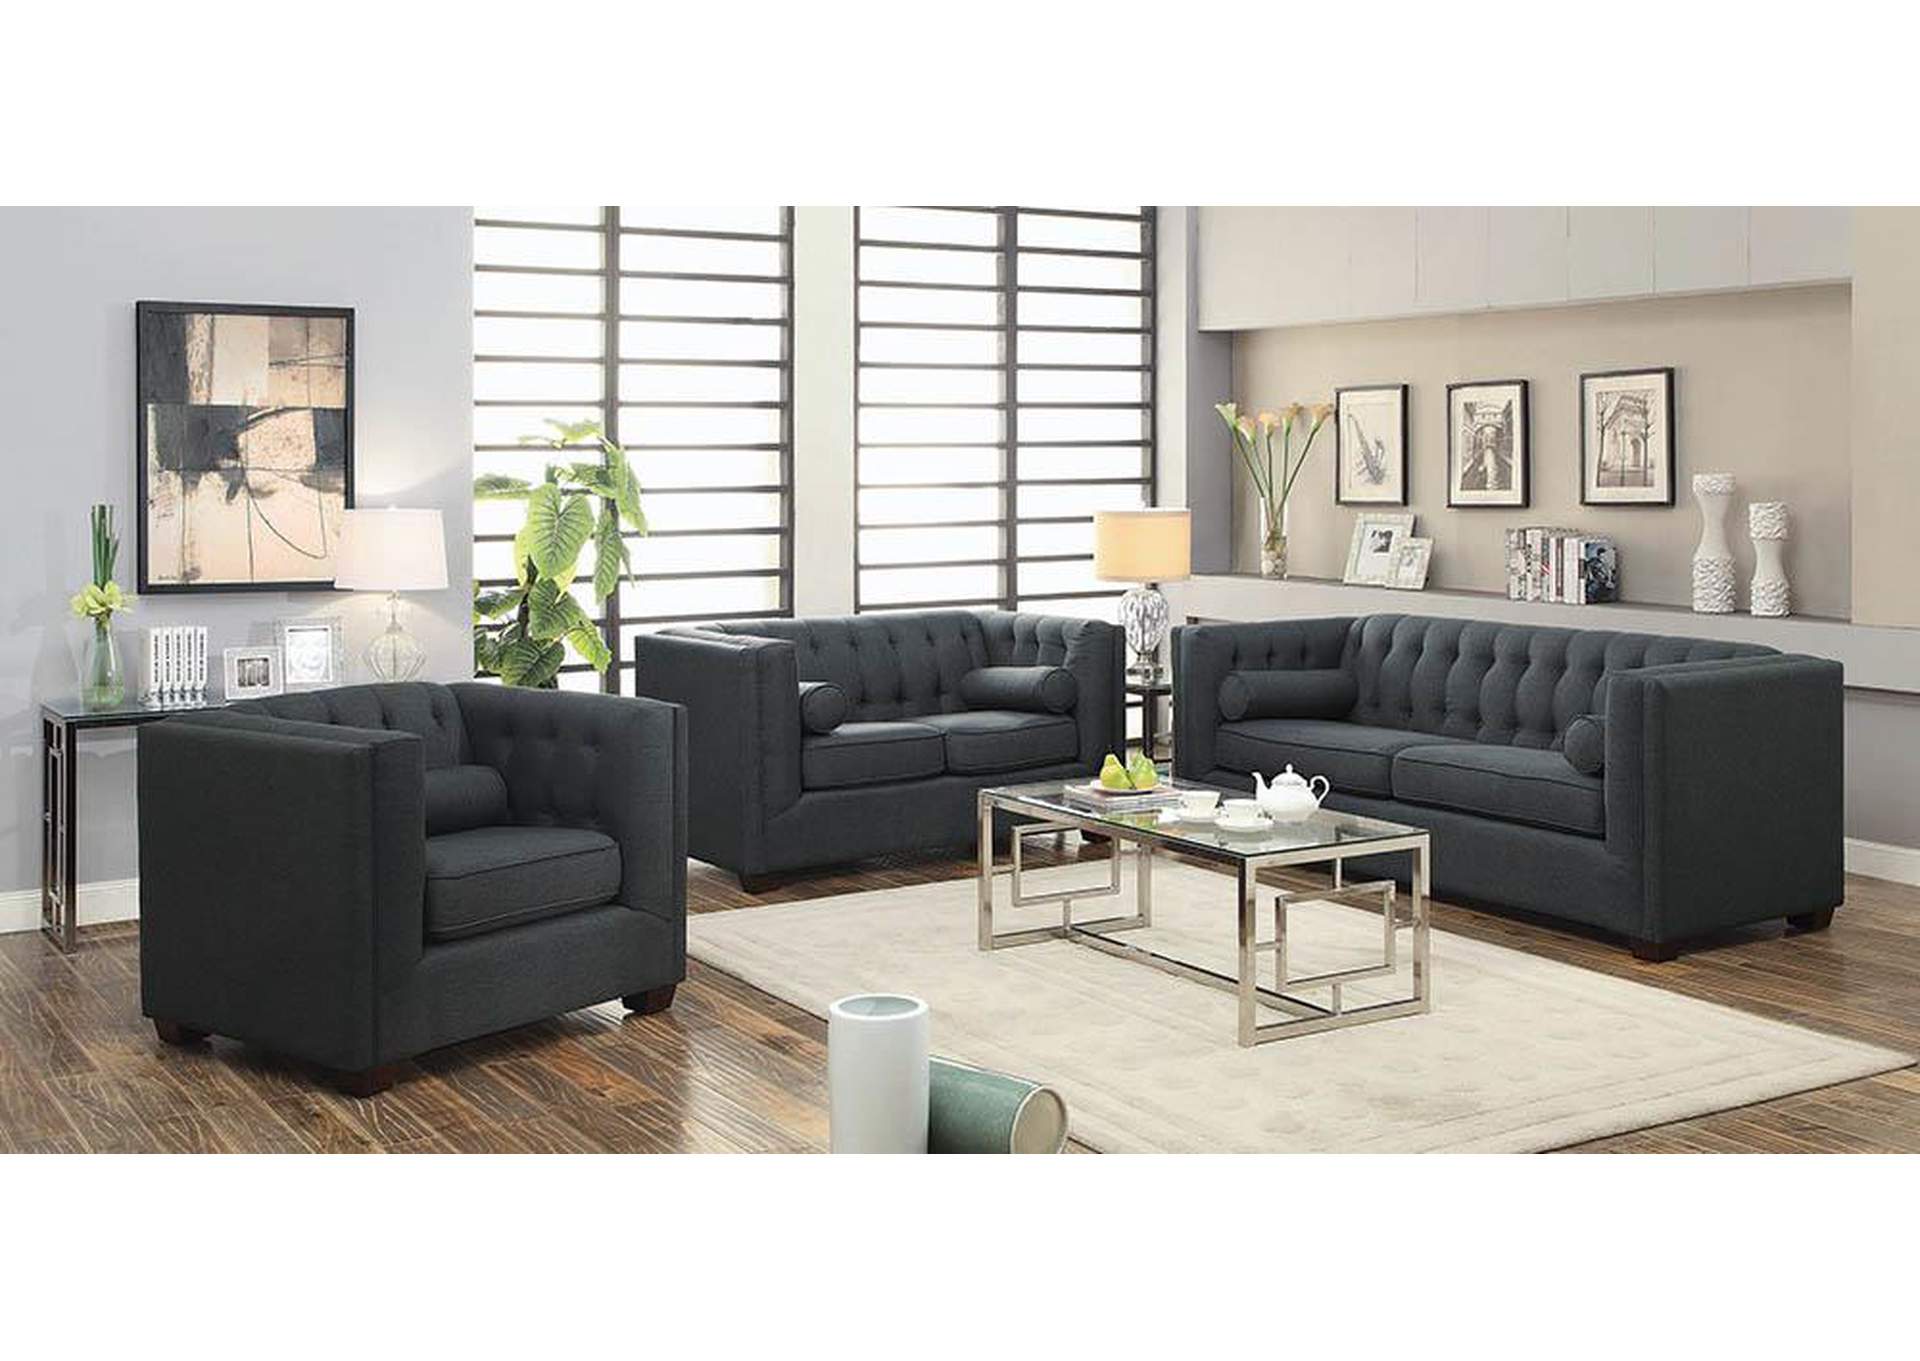 Cairns Brown Sofa,ABF Coaster Furniture